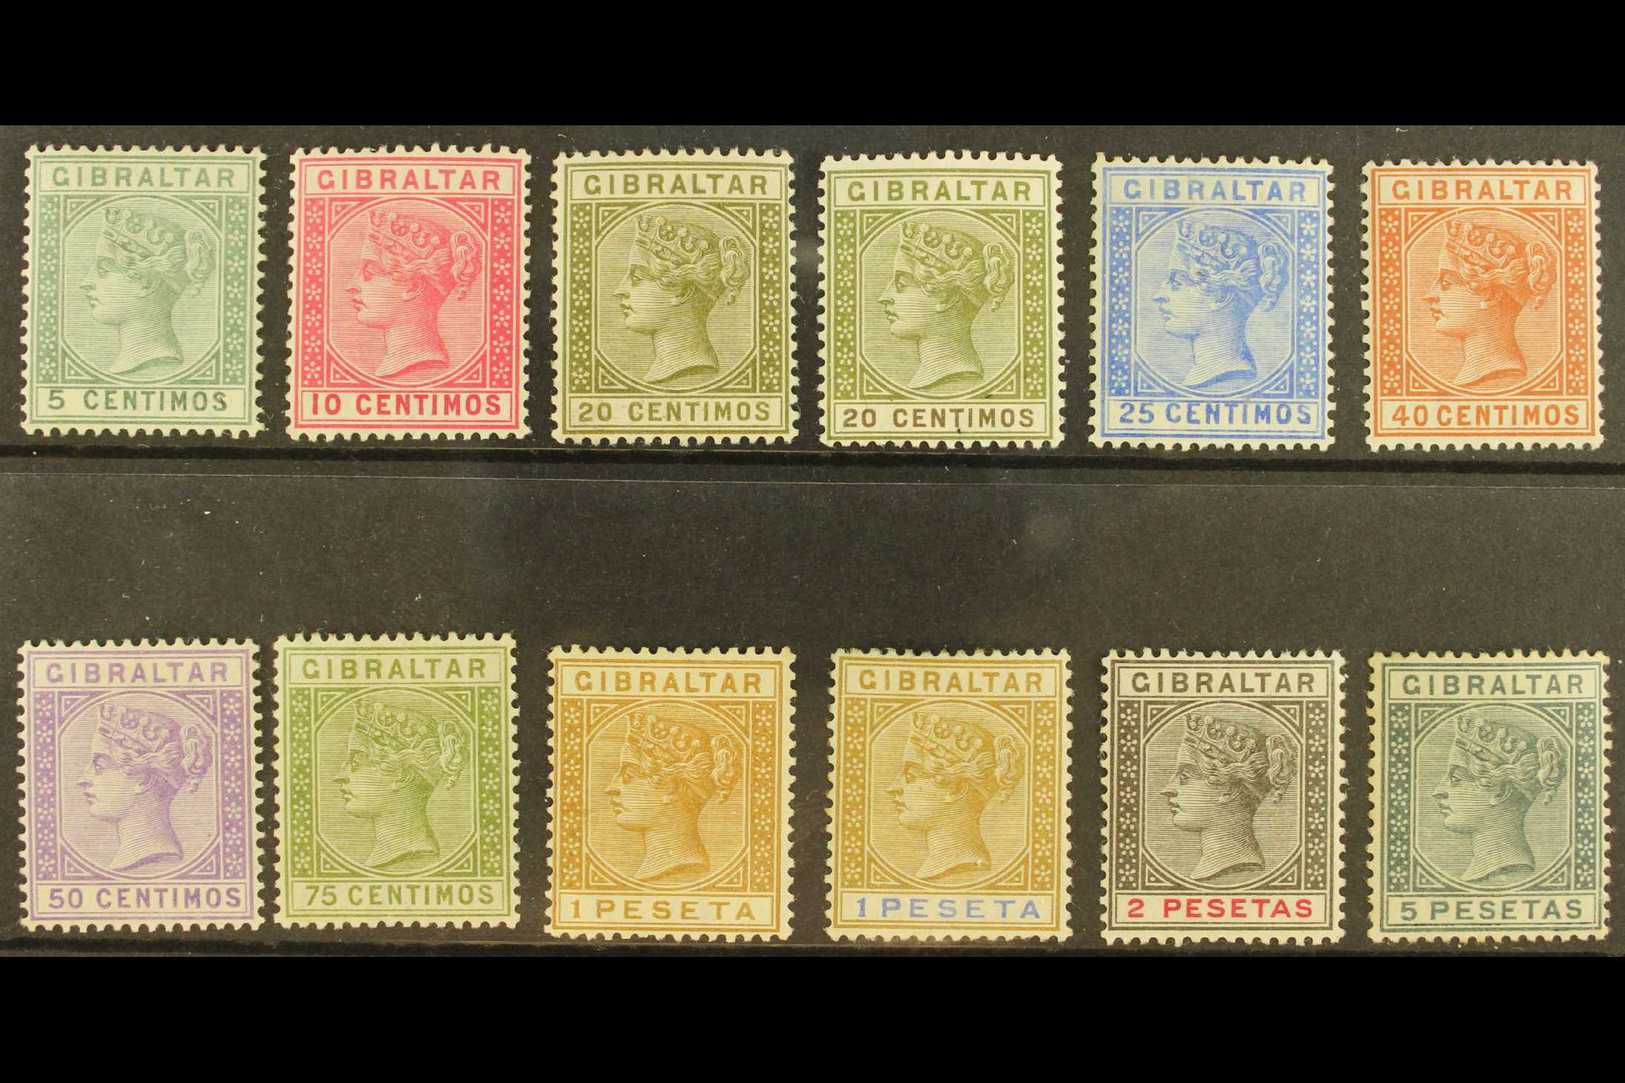 1889-96  Complete Set, SG 22/33, Fine Mint, Fresh Colours. (12 Stamps) For More Images, Please Visit Http://www.sandafay - Gibraltar